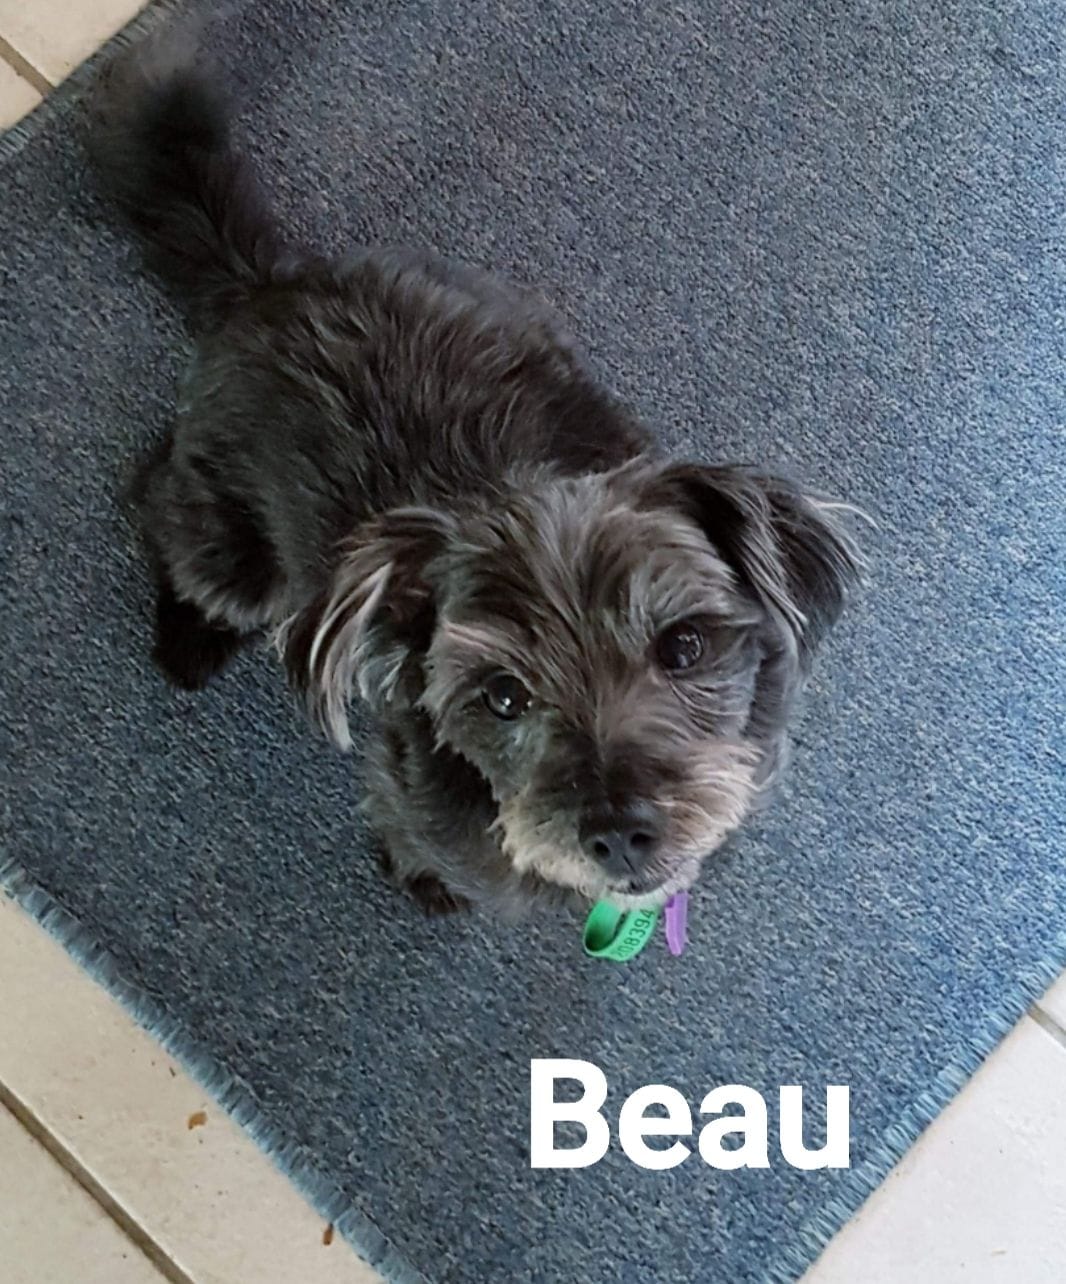 Beau after image